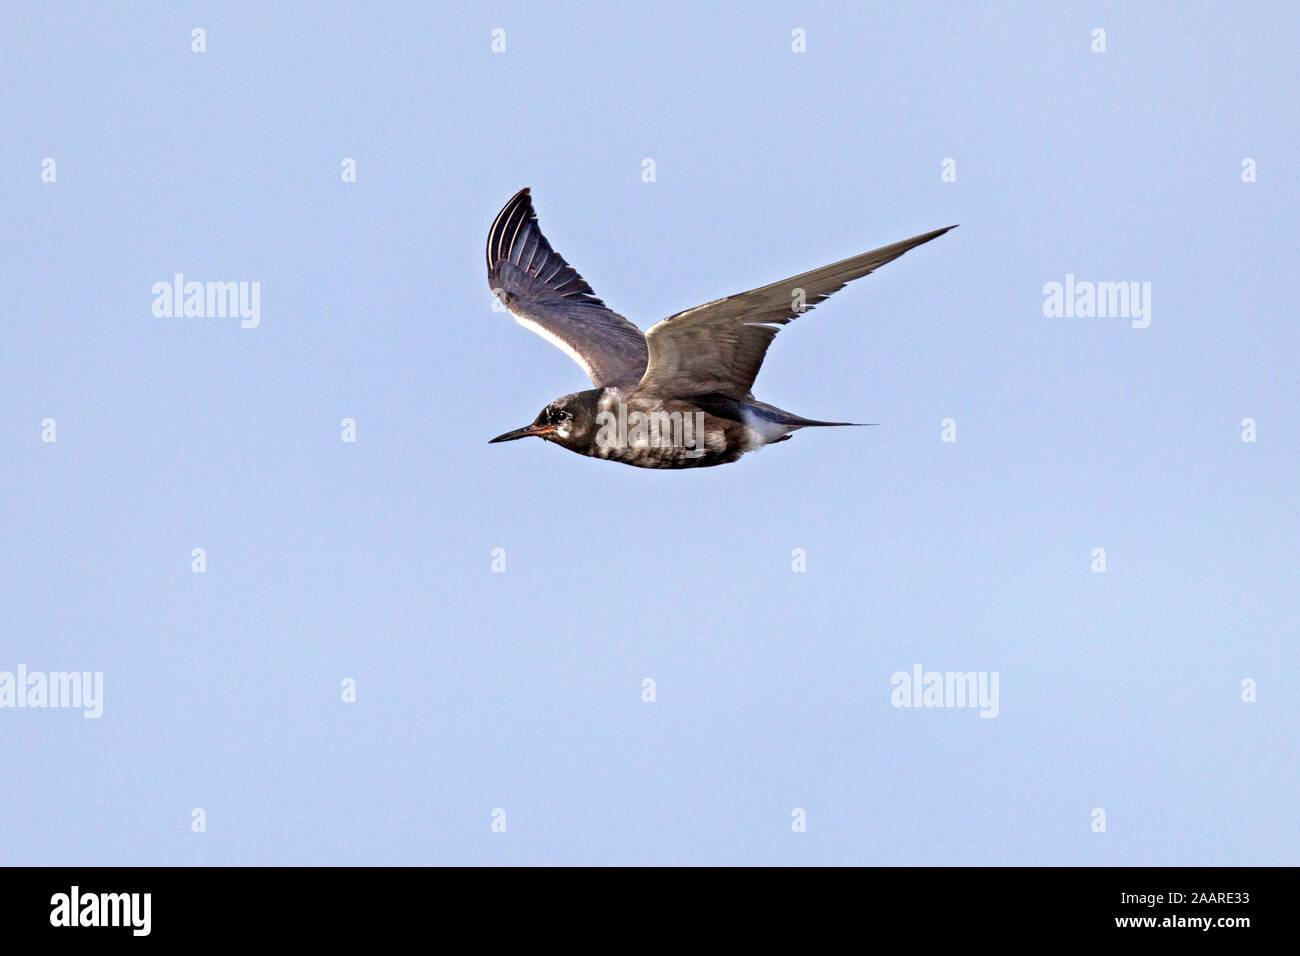 Trauerseeschwalbe (Chlidonias niger) Stock Photo